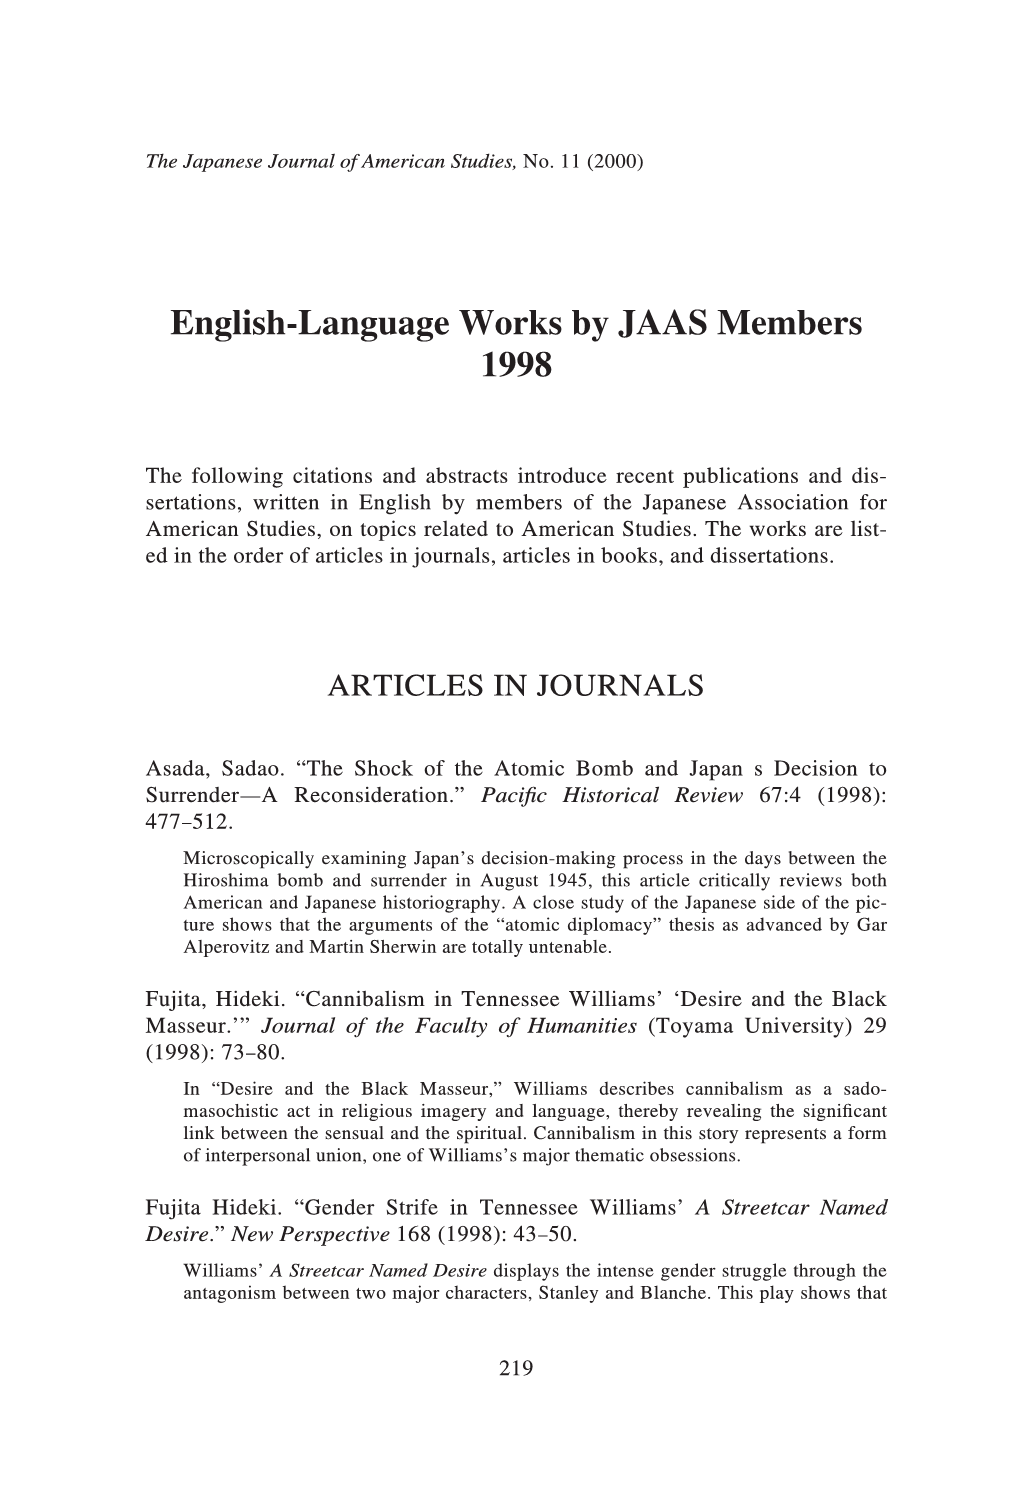 English-Language Works by JAAS Members 1998